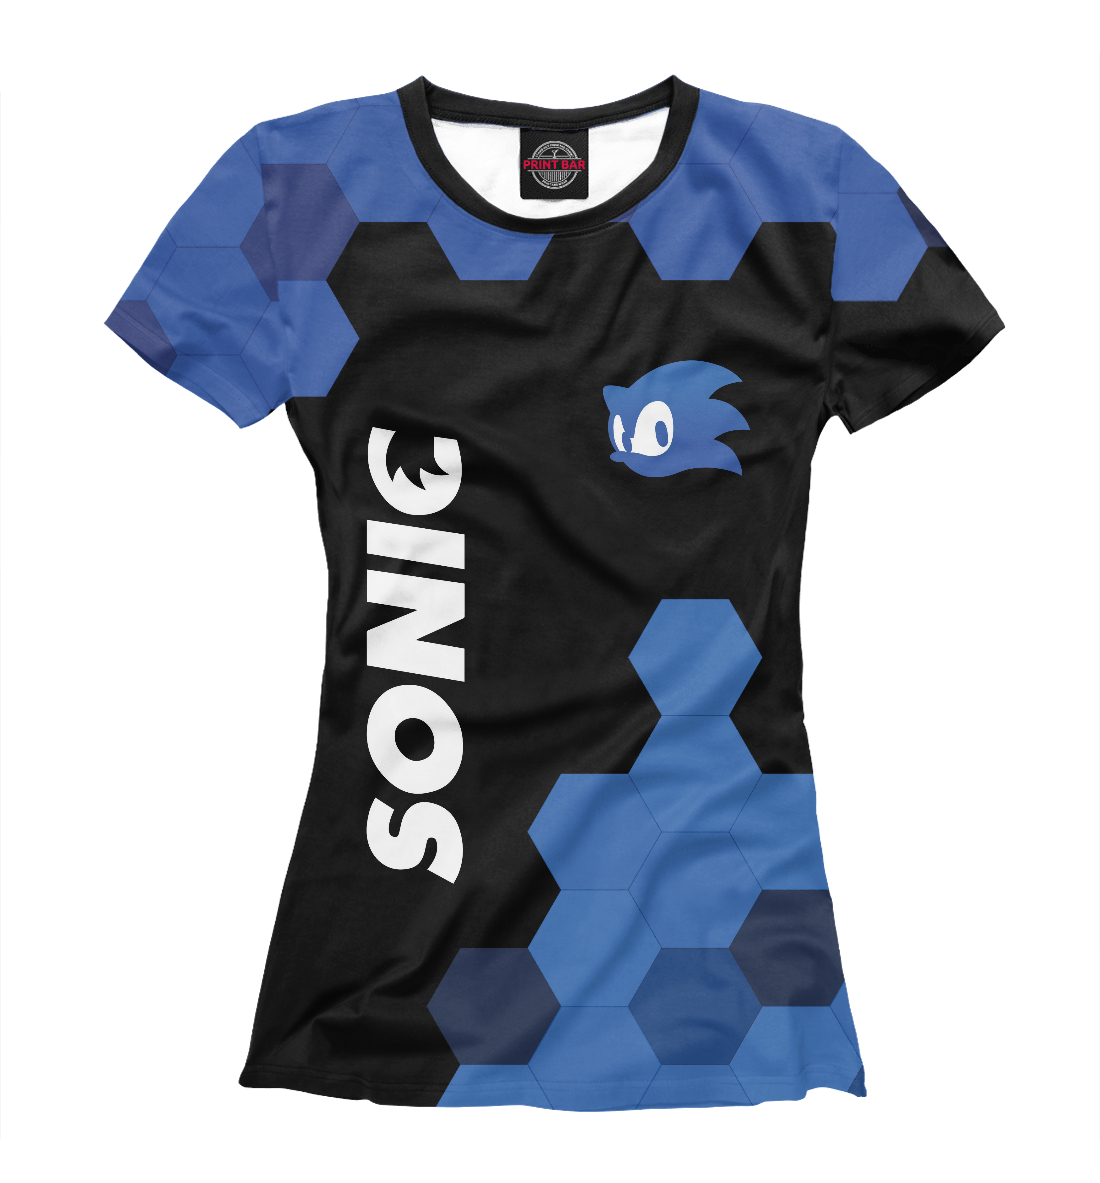 Футболка Соник / Sonic для девочек, артикул: RPG-252008-fut-1mp